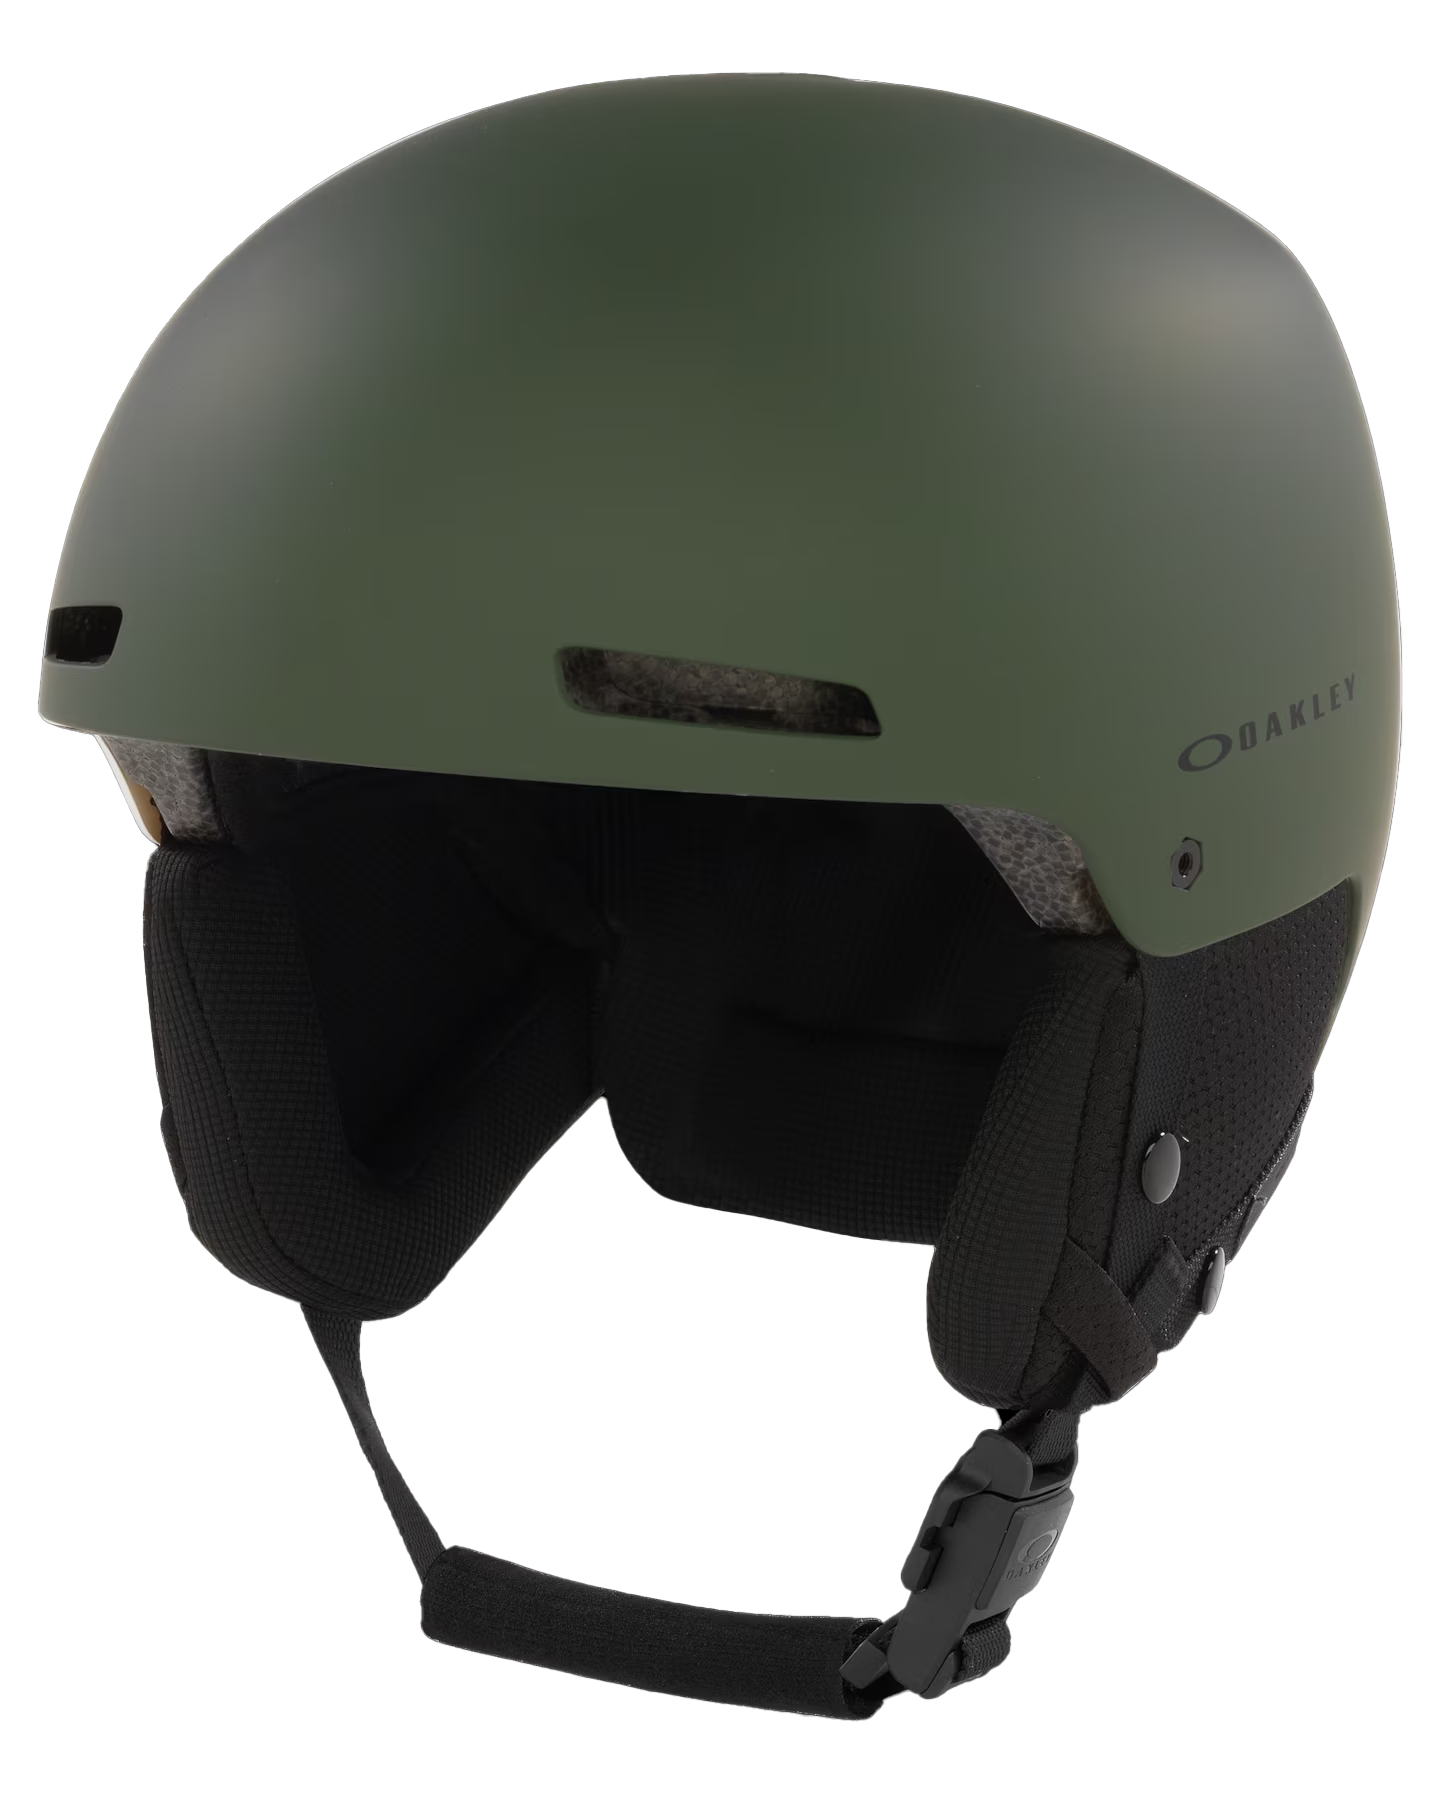 Oakley Mod1 Pro Snow Helmet - Dark Brush Men's Snow Helmets - SnowSkiersWarehouse